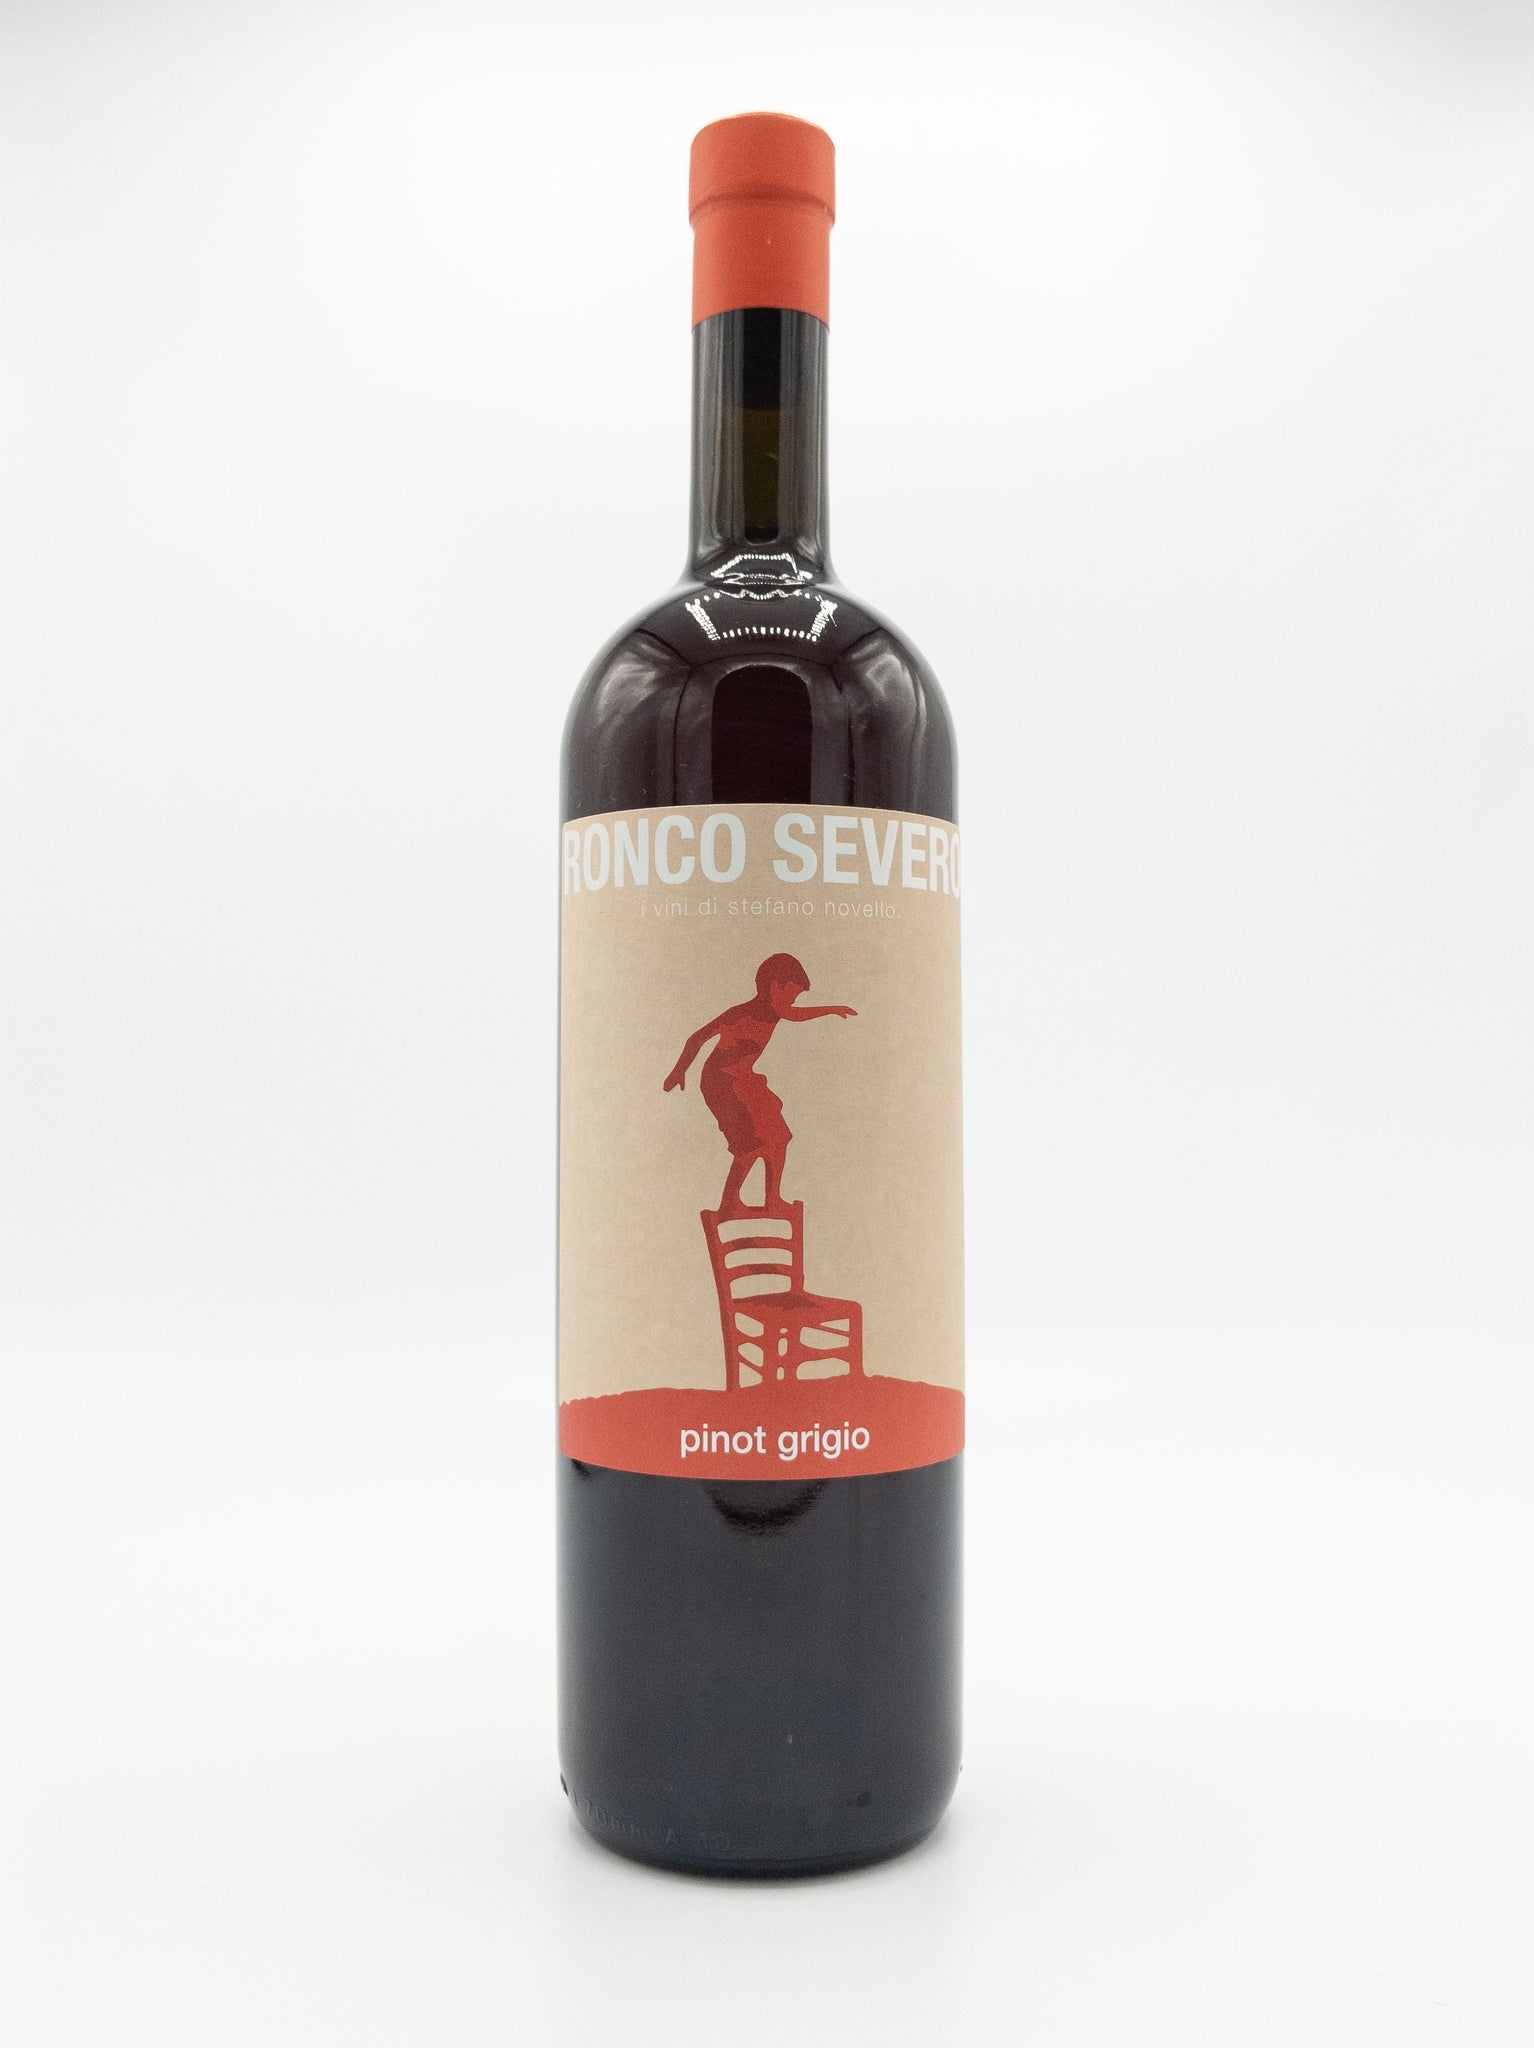 Ronco Severo 'Pinot Grigio' 2018